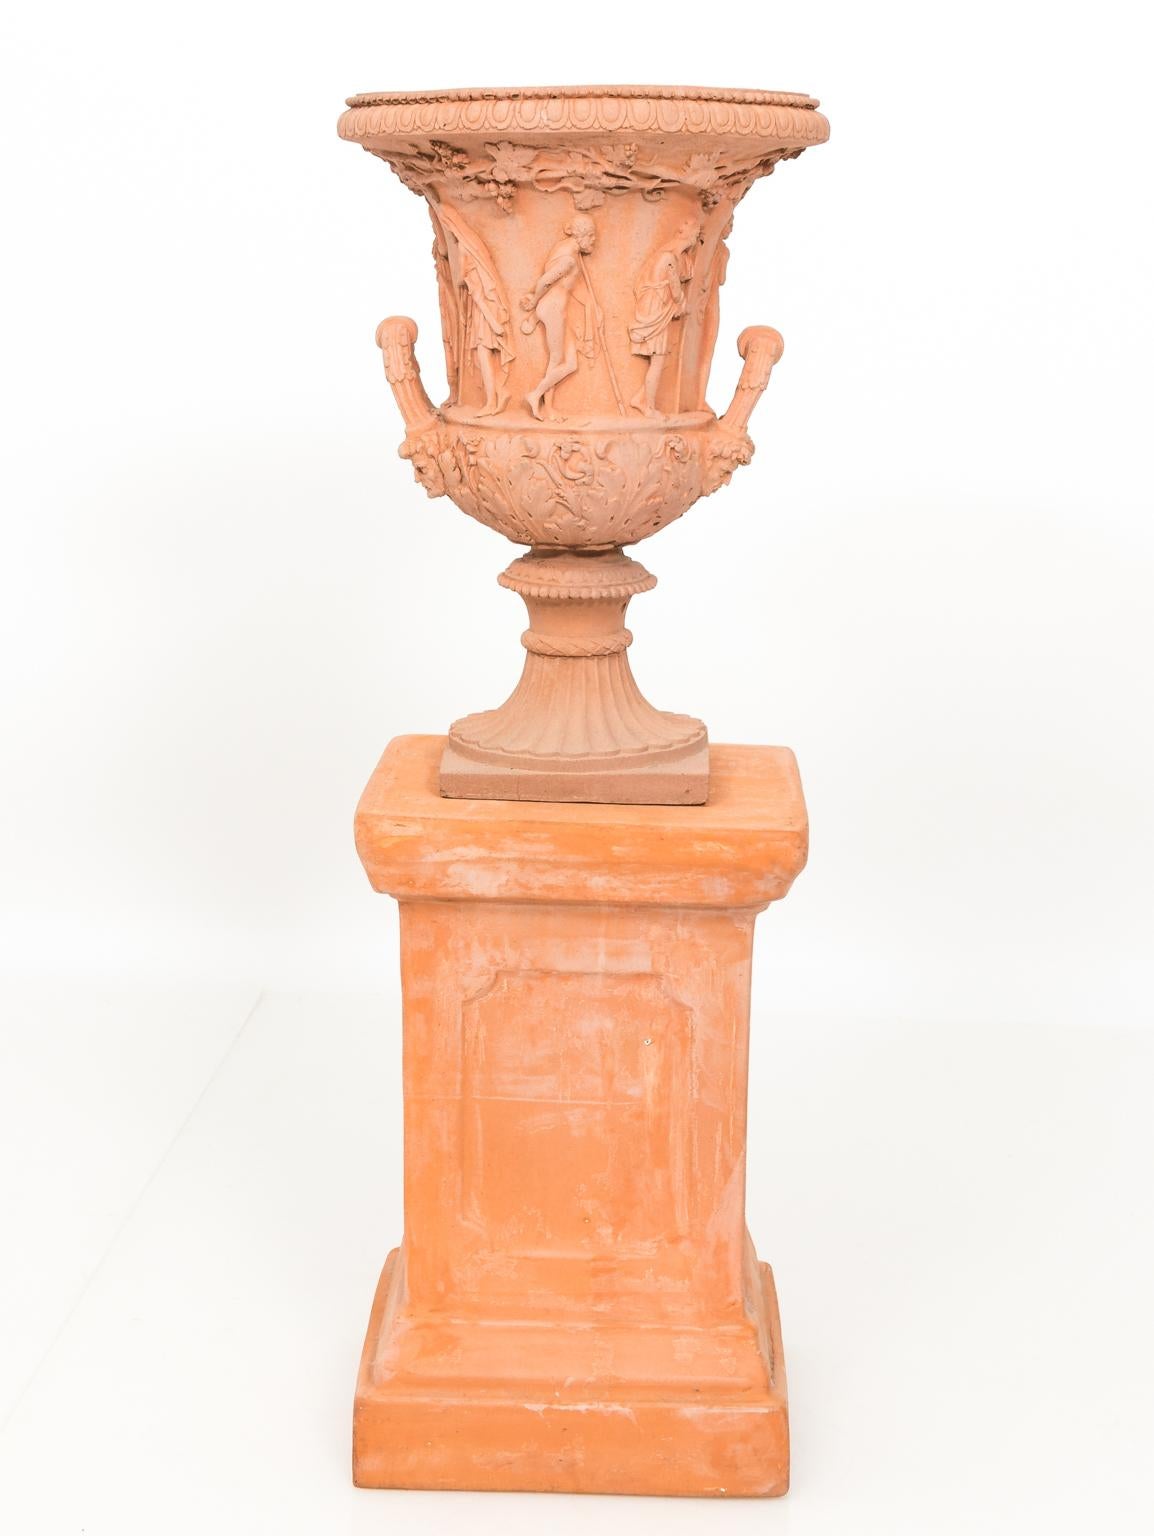 Pair of Neoclassical Terracotta Urns 16